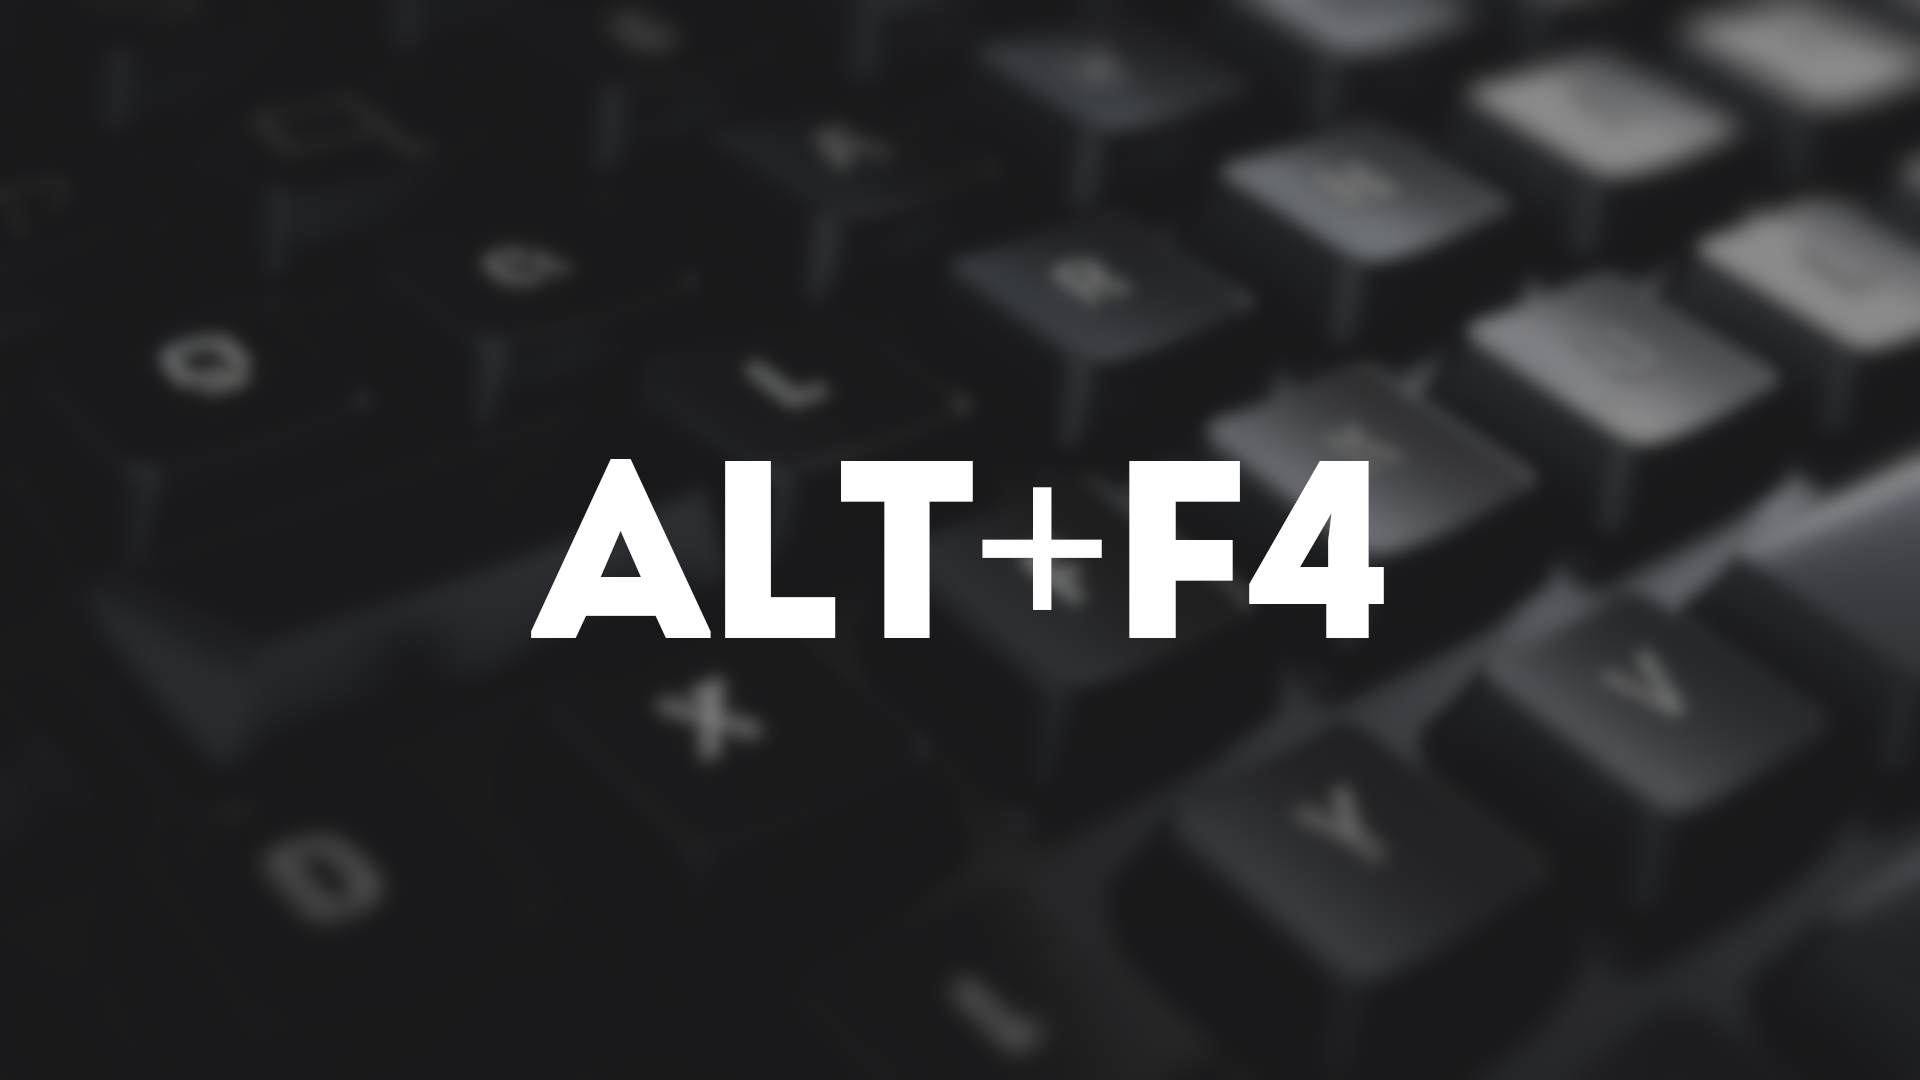 ALT+F4 Сочетание клавиш на windows 10. Горячие клавиши на компьютере.